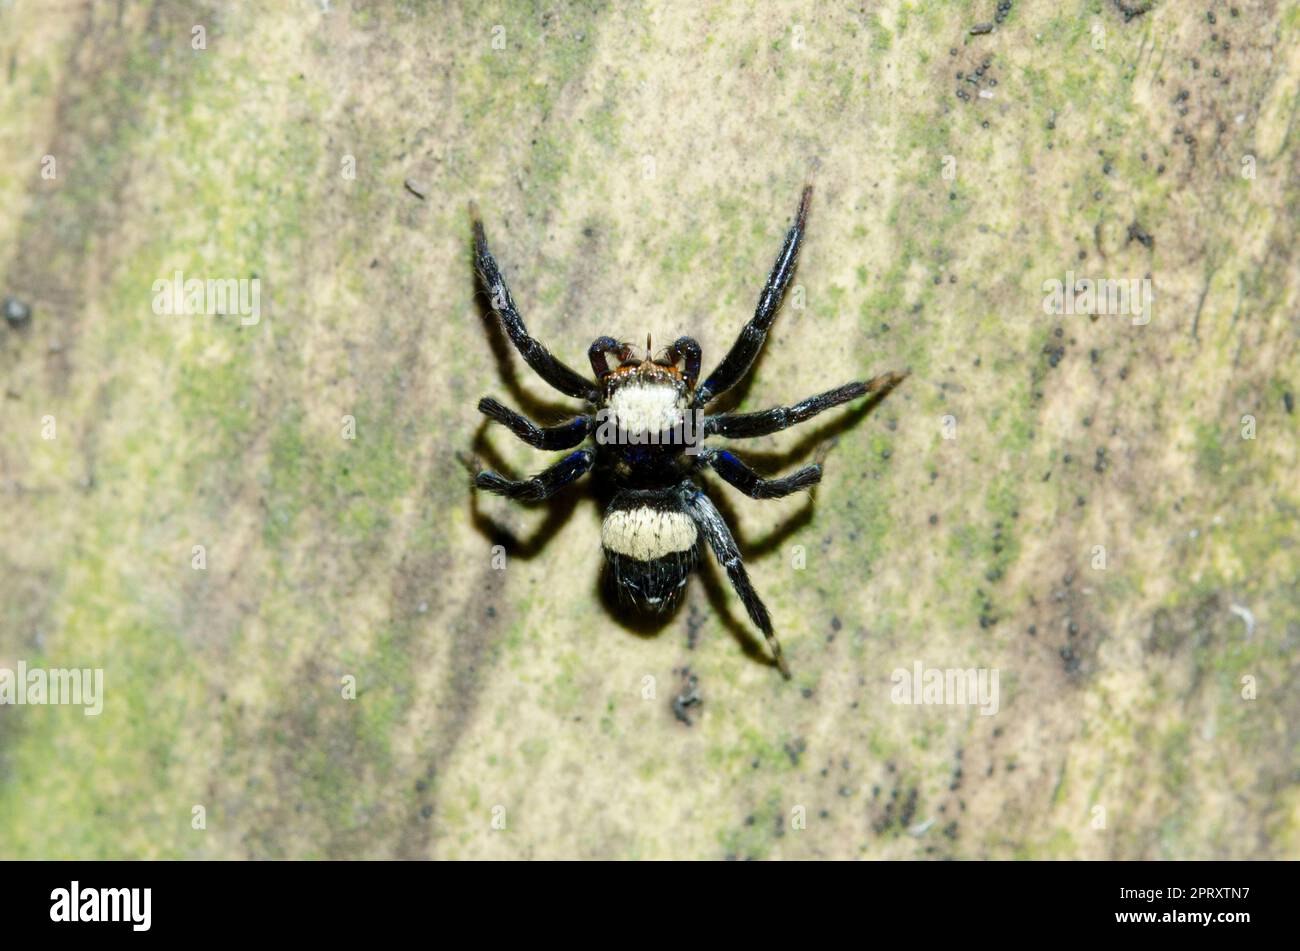 Male Sword-Bearing Thorelliola Spider, Thorelliola Ensifera, on tree, Klungkung, Bali, Indonesia Stock Photo